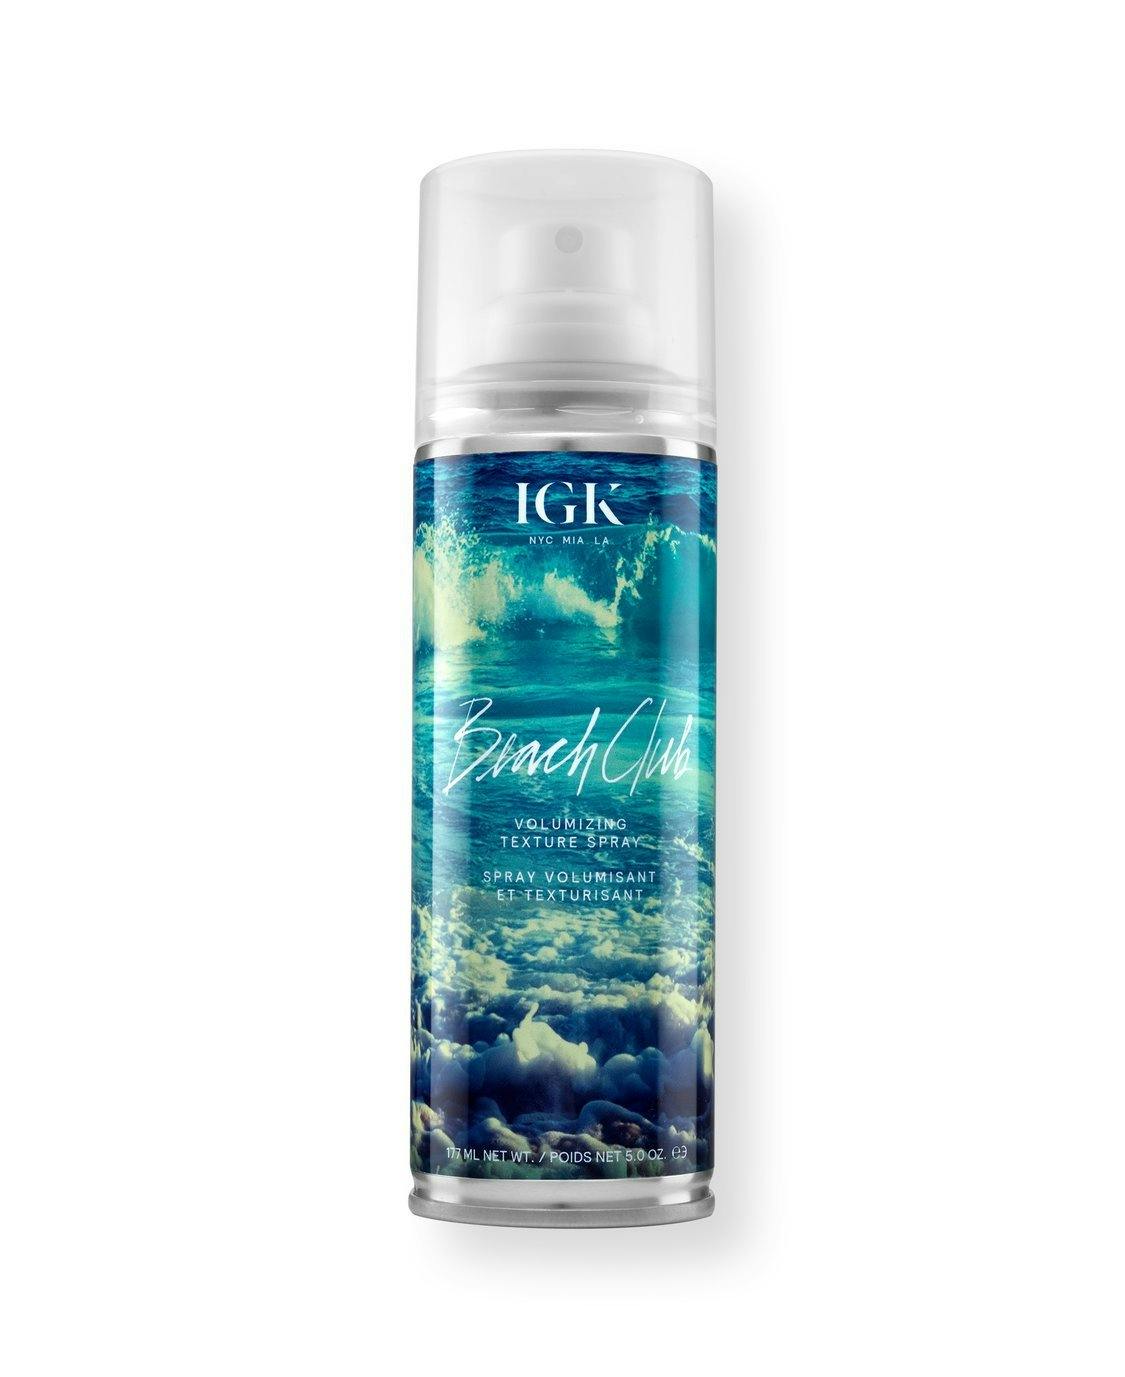 IGK Beach Club Texture Spray 177ml